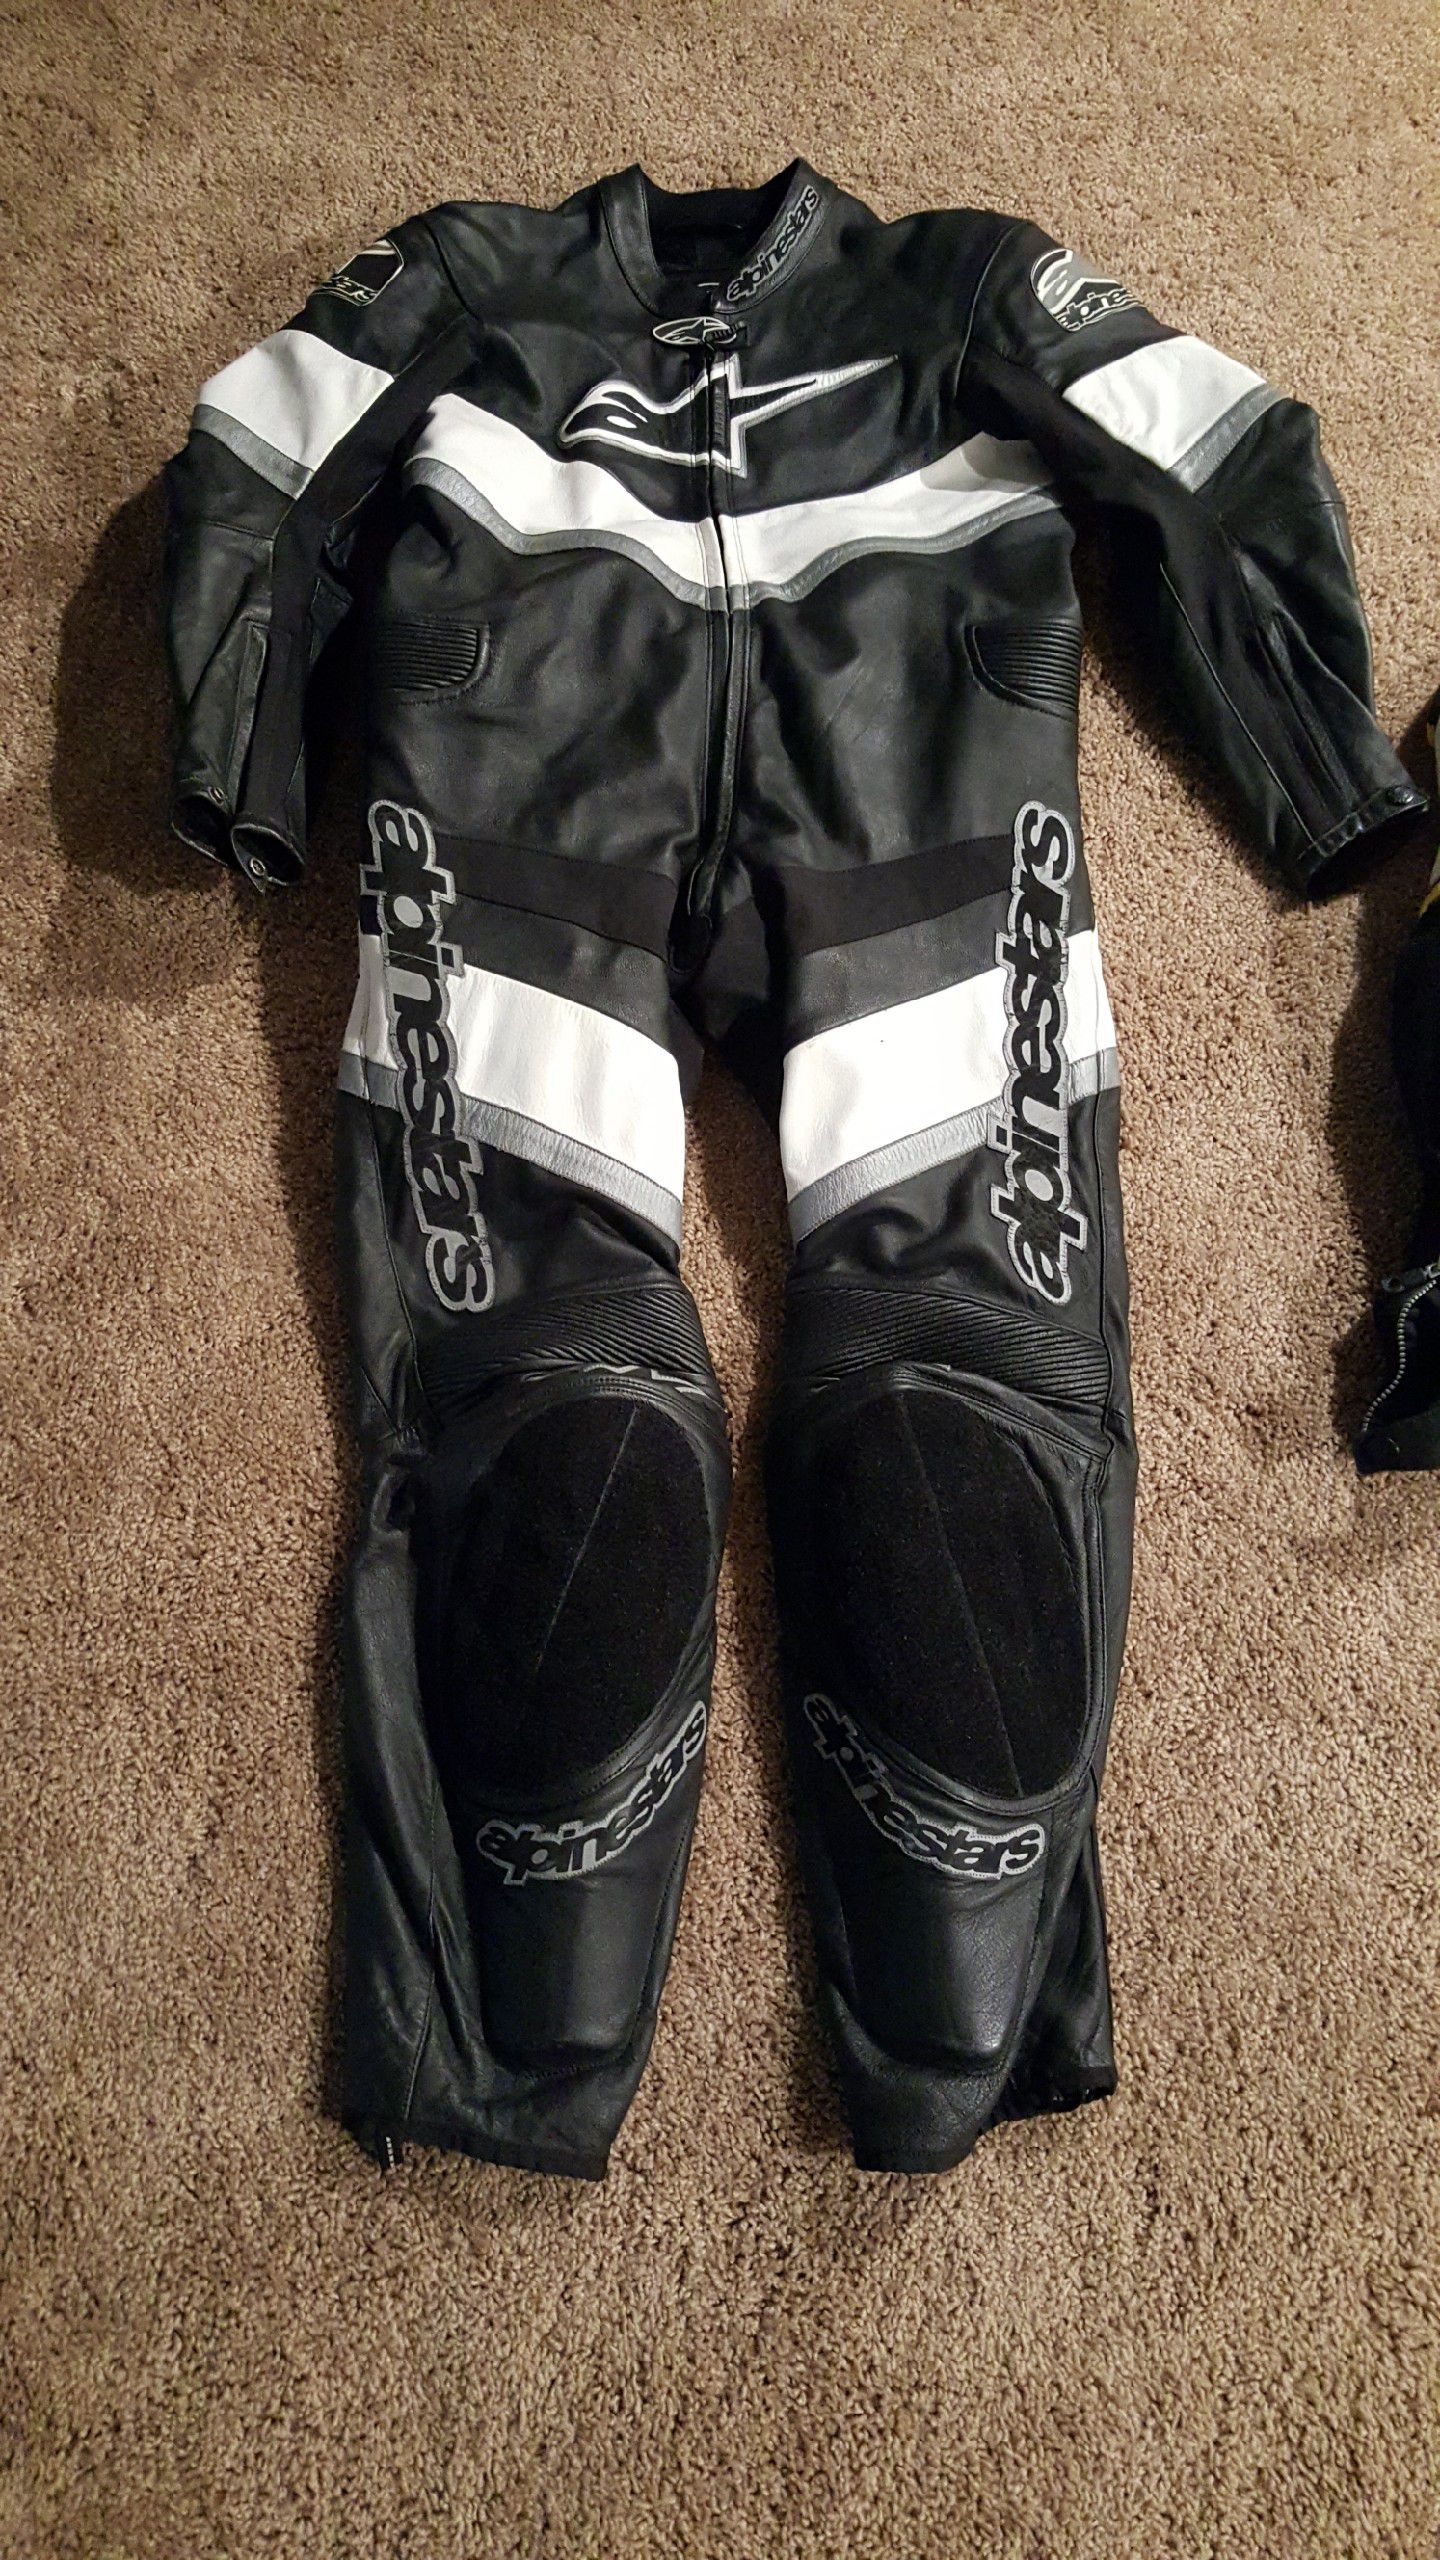 Alpinestars leather bike suit